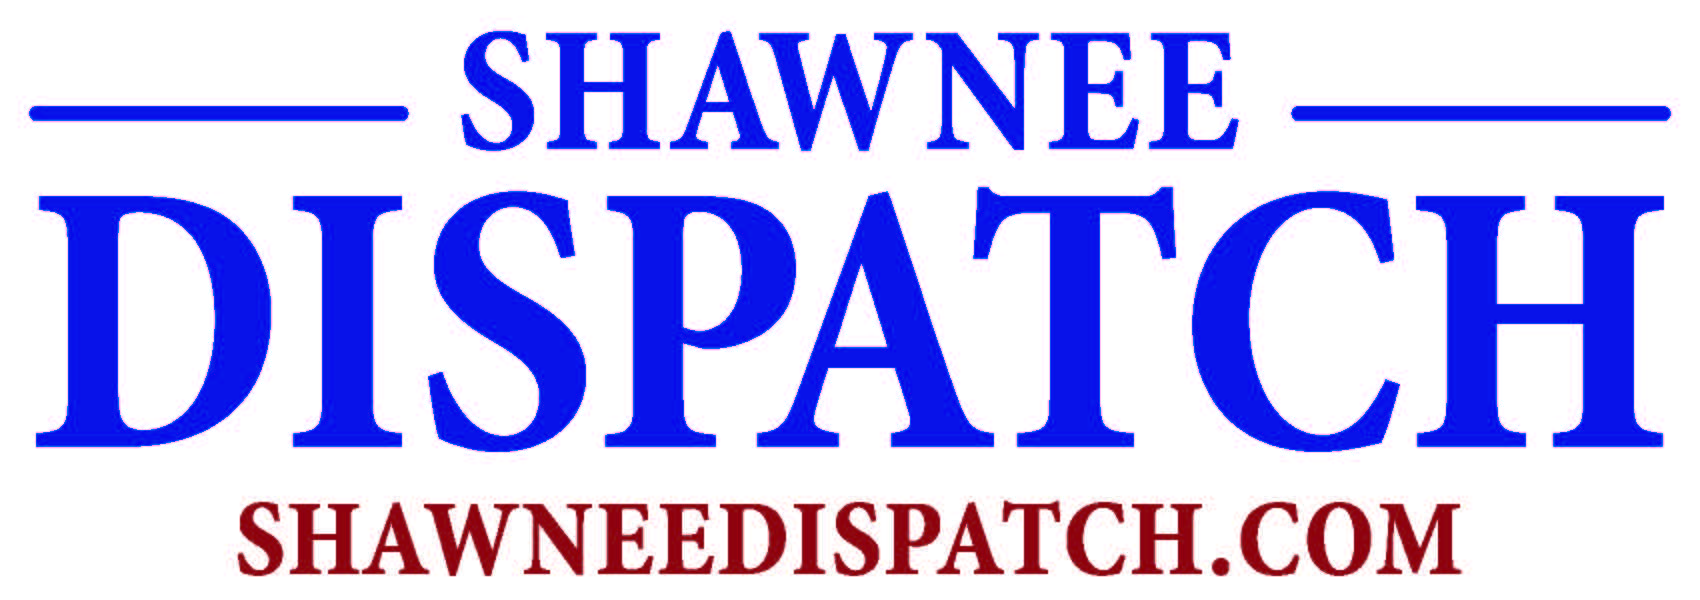 Dispatch Logo - Shawnee Dispatch Logo